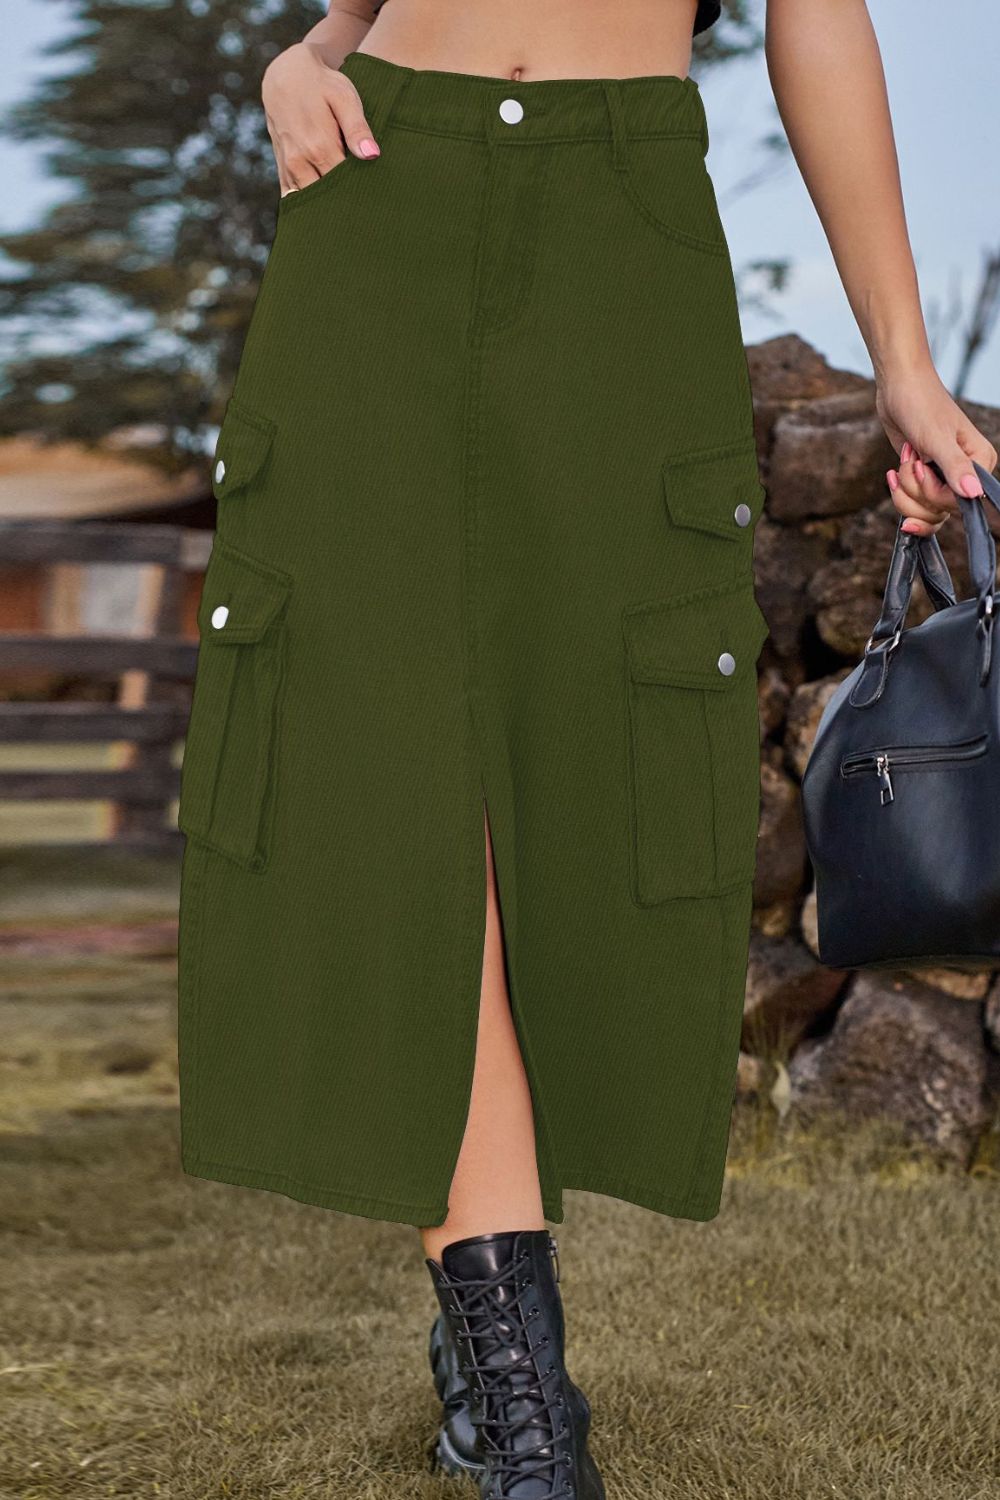 Dark Slate Gray Slit Front Midi Denim Skirt with Pockets Sentient Beauty Fashions Apparel & Accessories